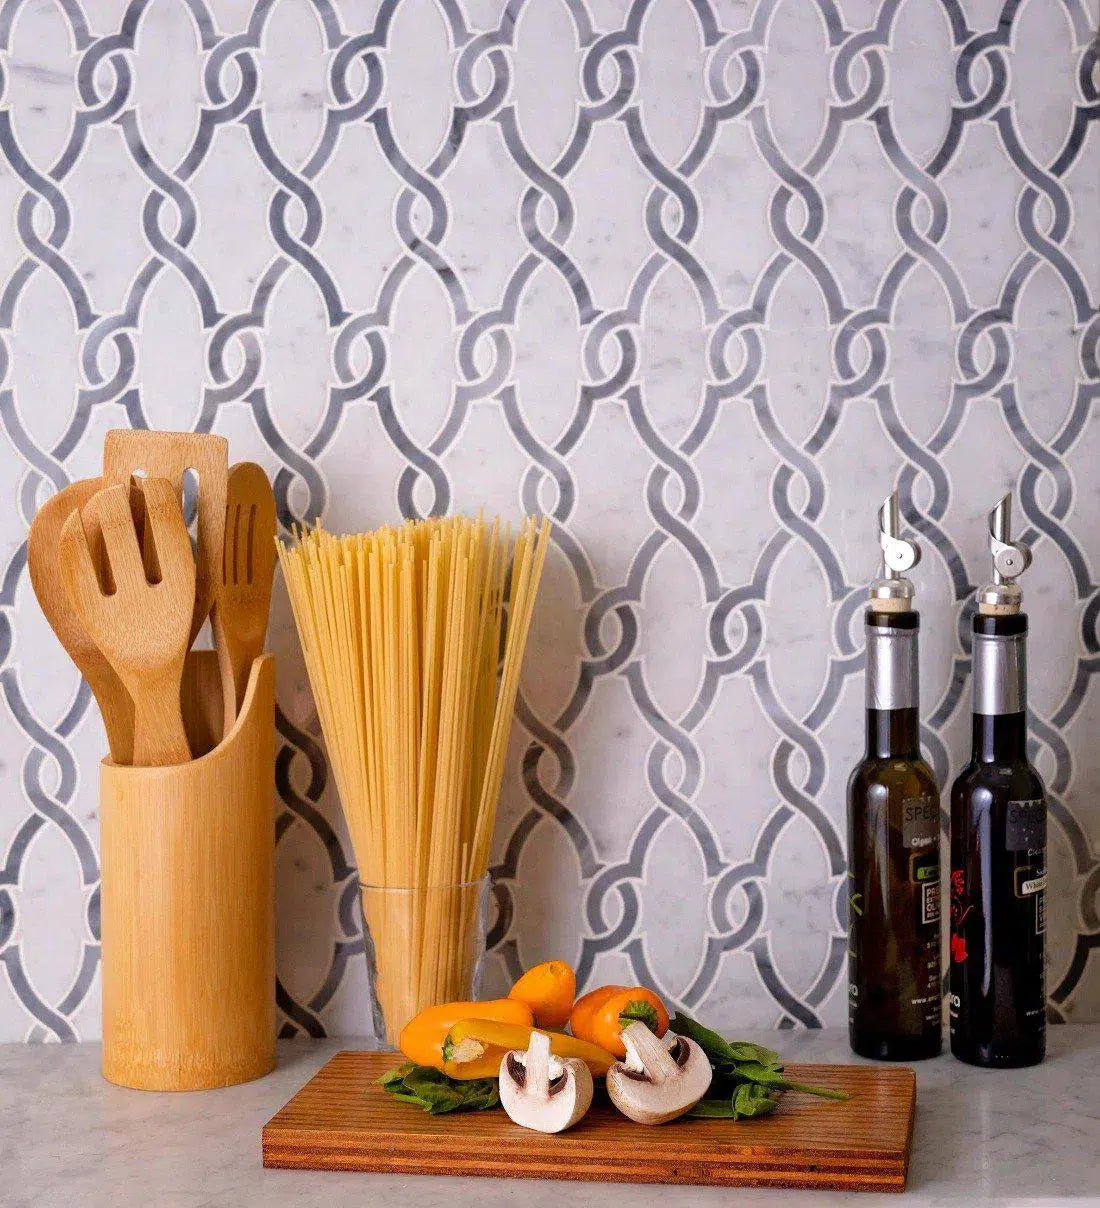 Bardiglio Chains Marble Mosaic Tile for a Festive Kitchen Backsplash